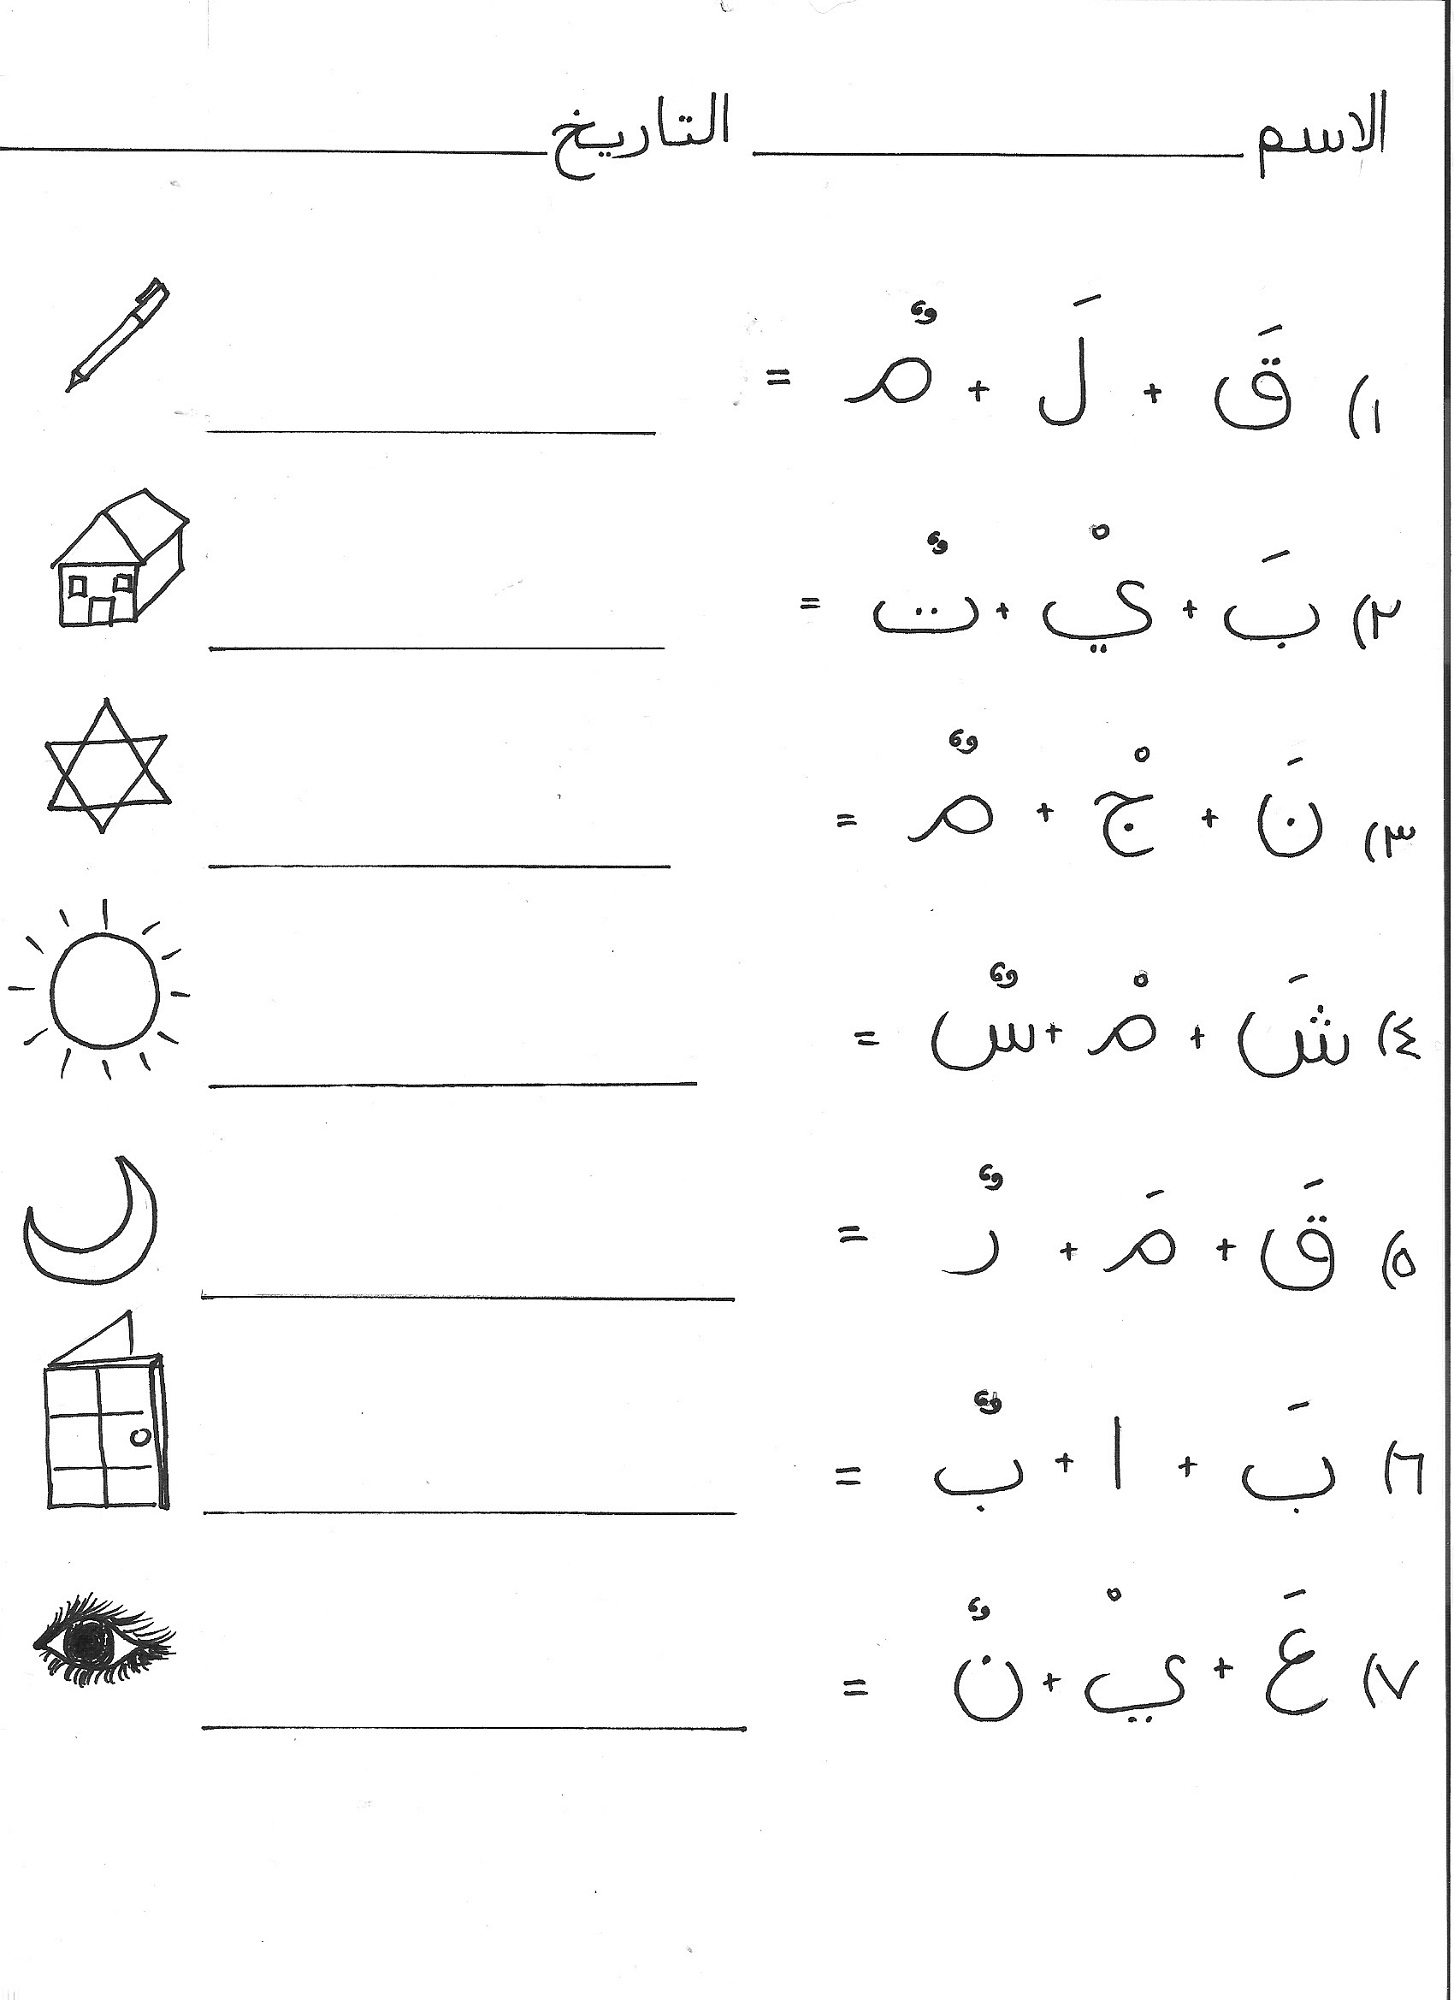 teach-child-how-to-read-arabic-alphabet-free-printable-worksheets-arabic-alphabet-worksheets